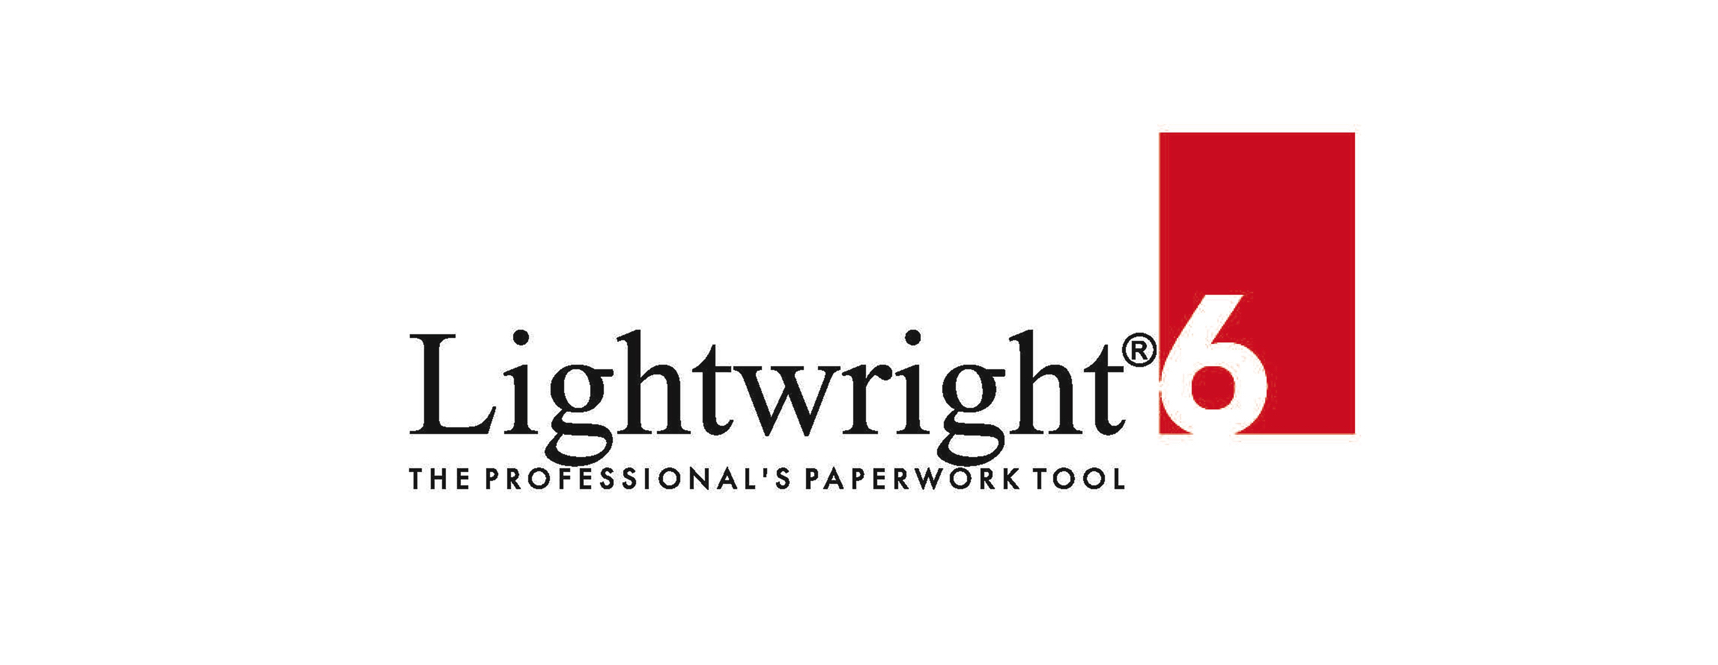 lightwright 6 edit paperwork